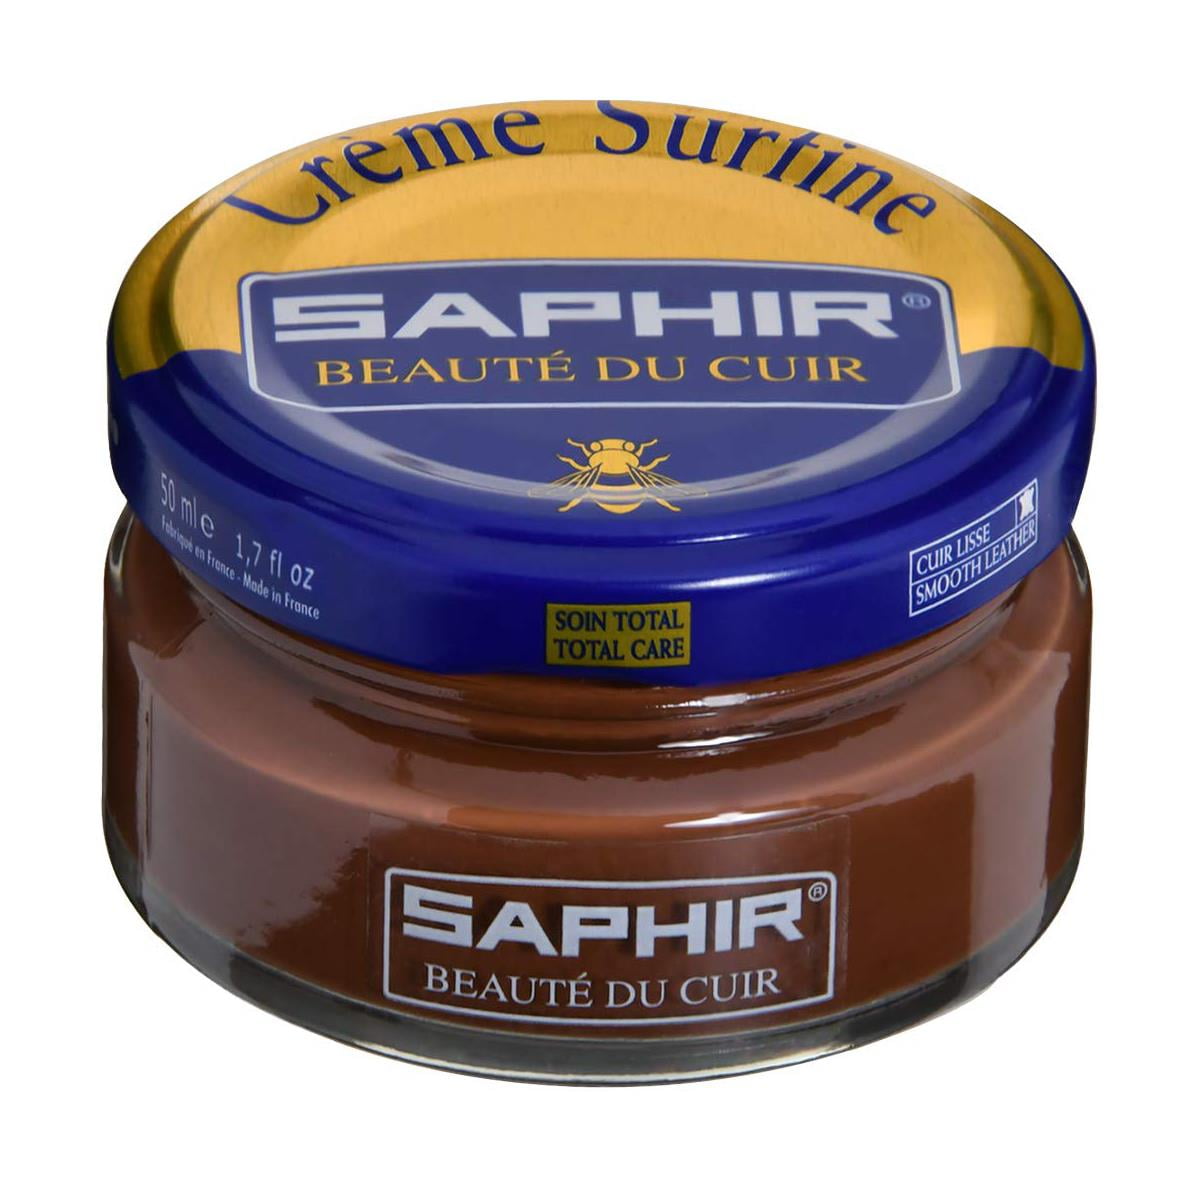 Saphir Beaute du Cuir Creme Surfine Shoe Polish 50ml Jar-08 Burgundy